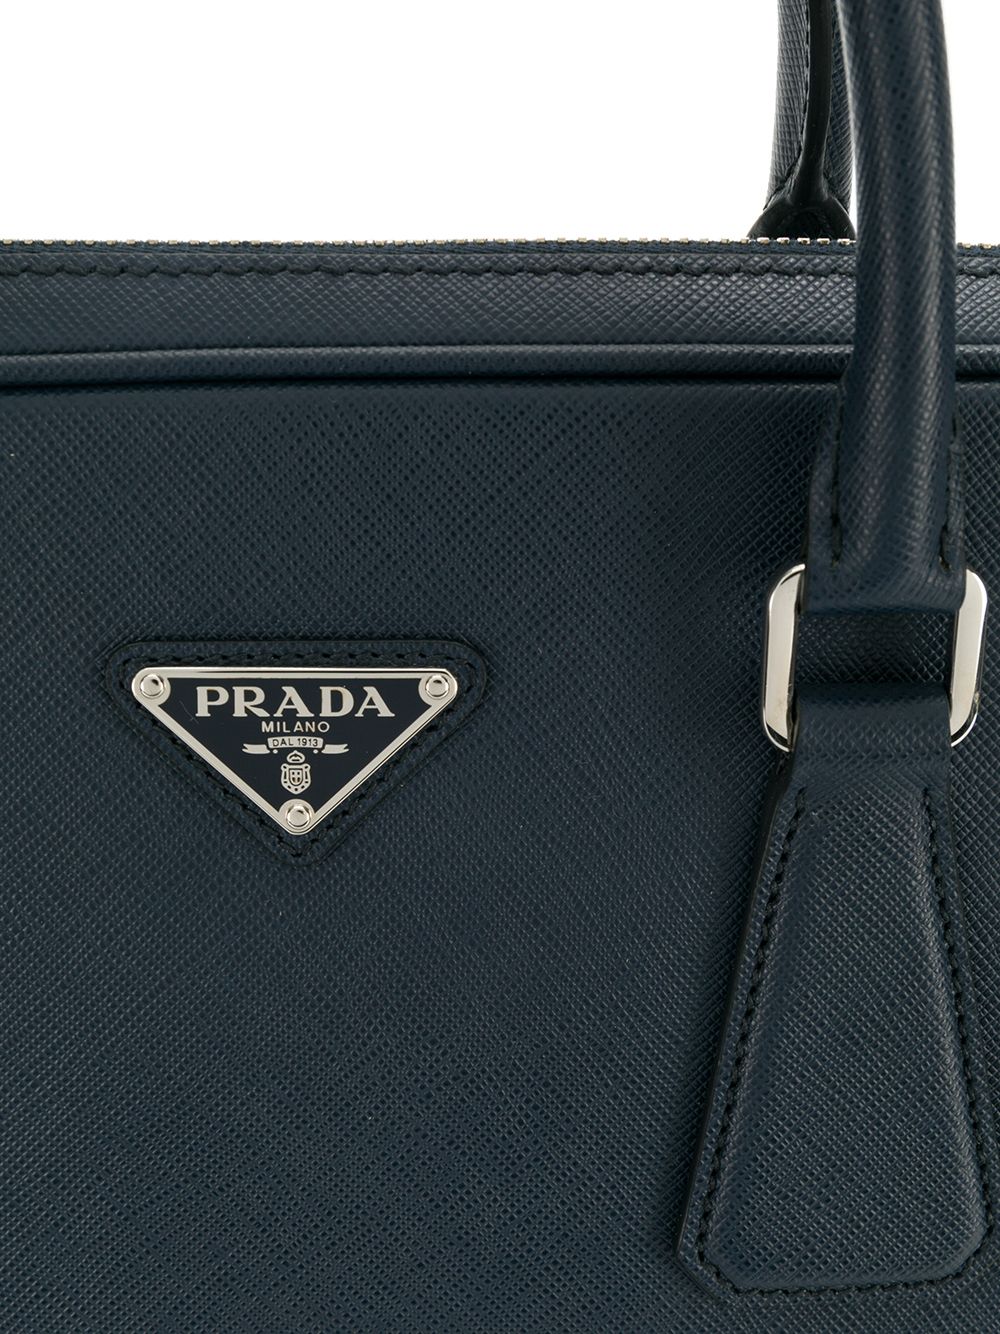 Prada Classic Laptop Bag - Farfetch